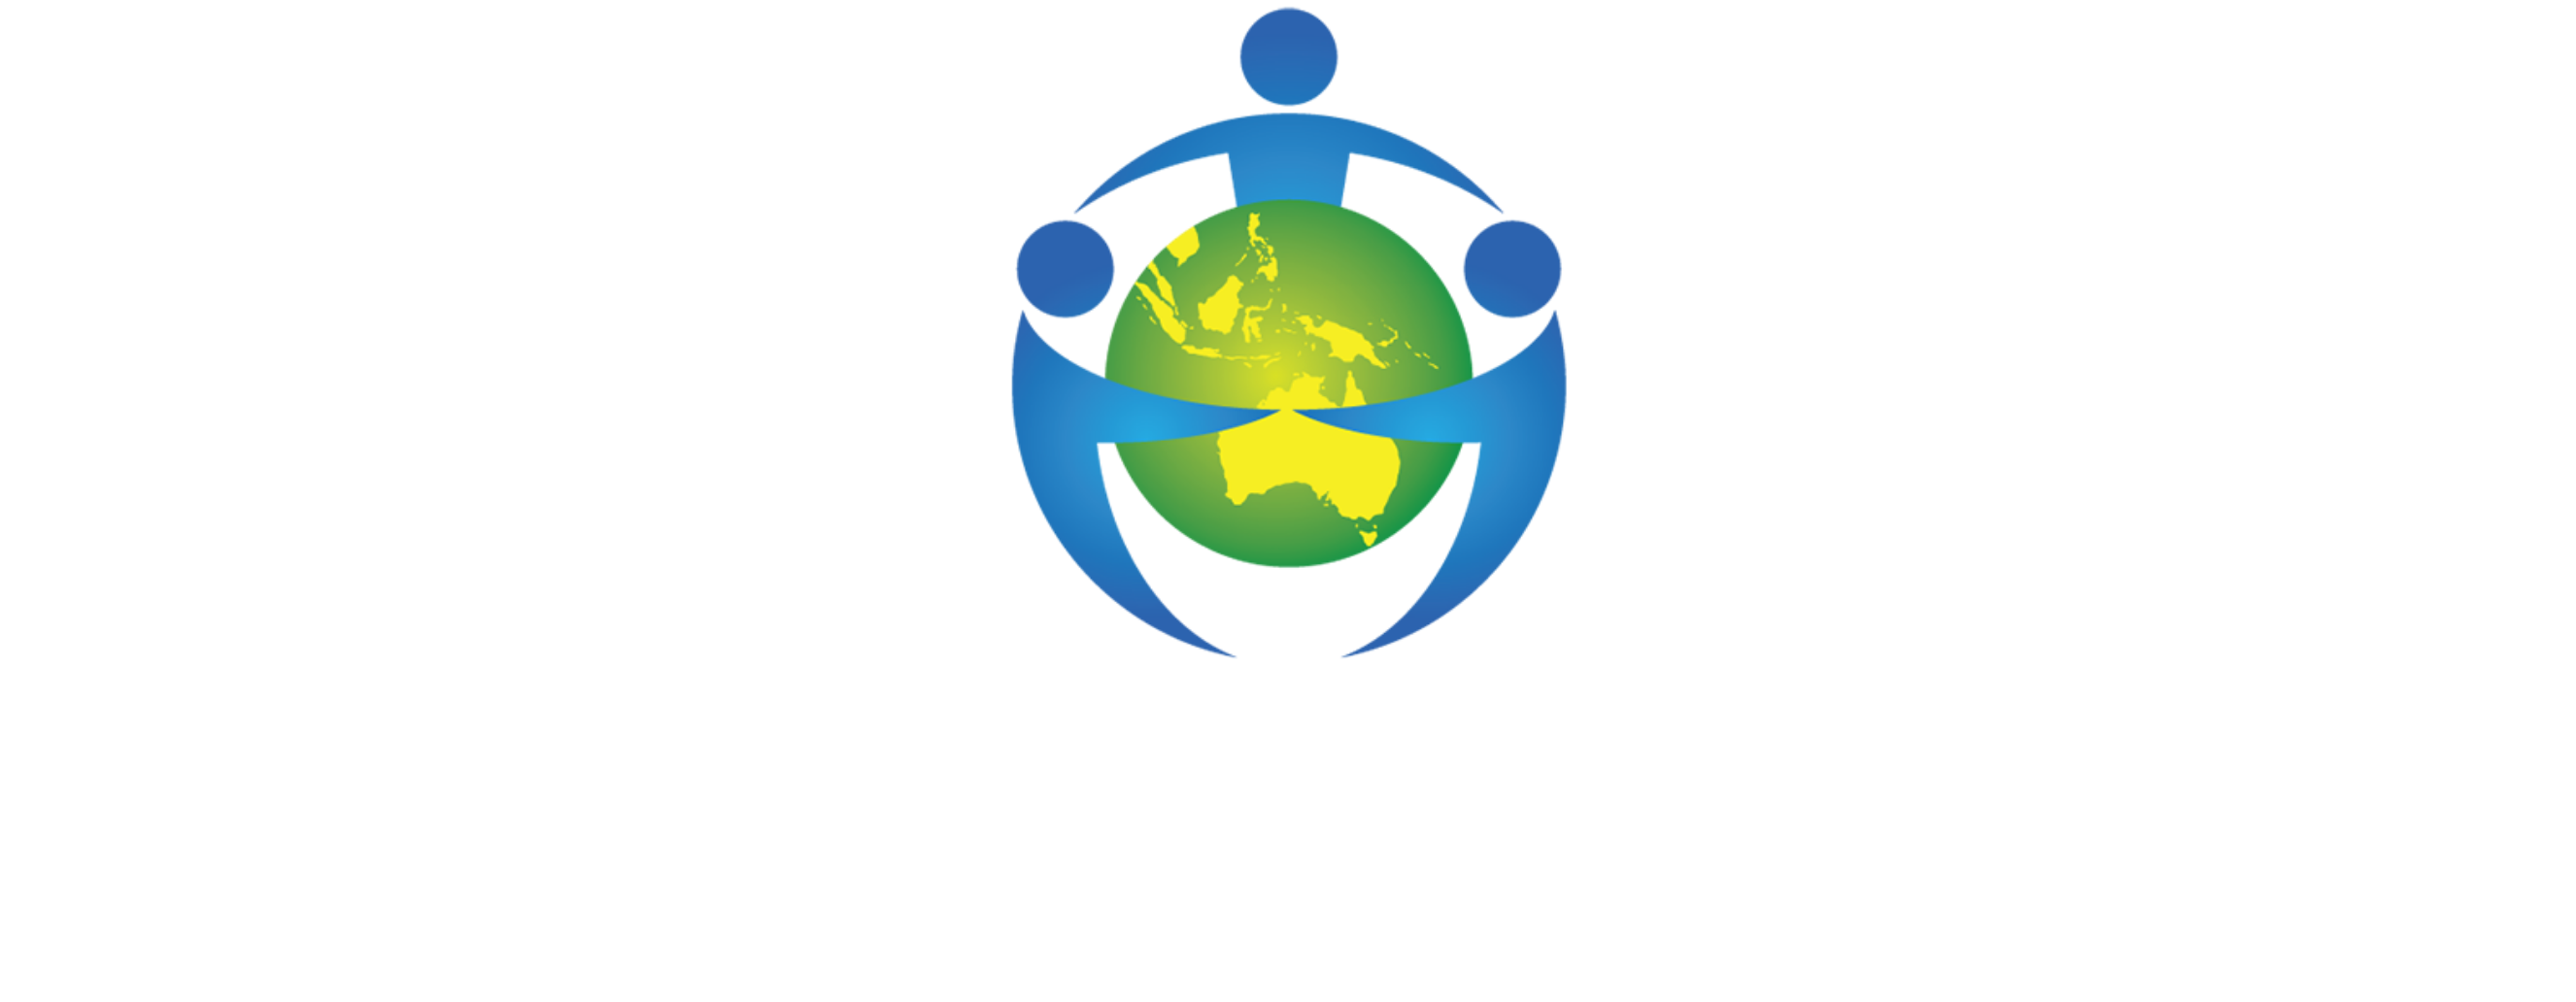 Winds of Hope Vertical Dark Theme Logo